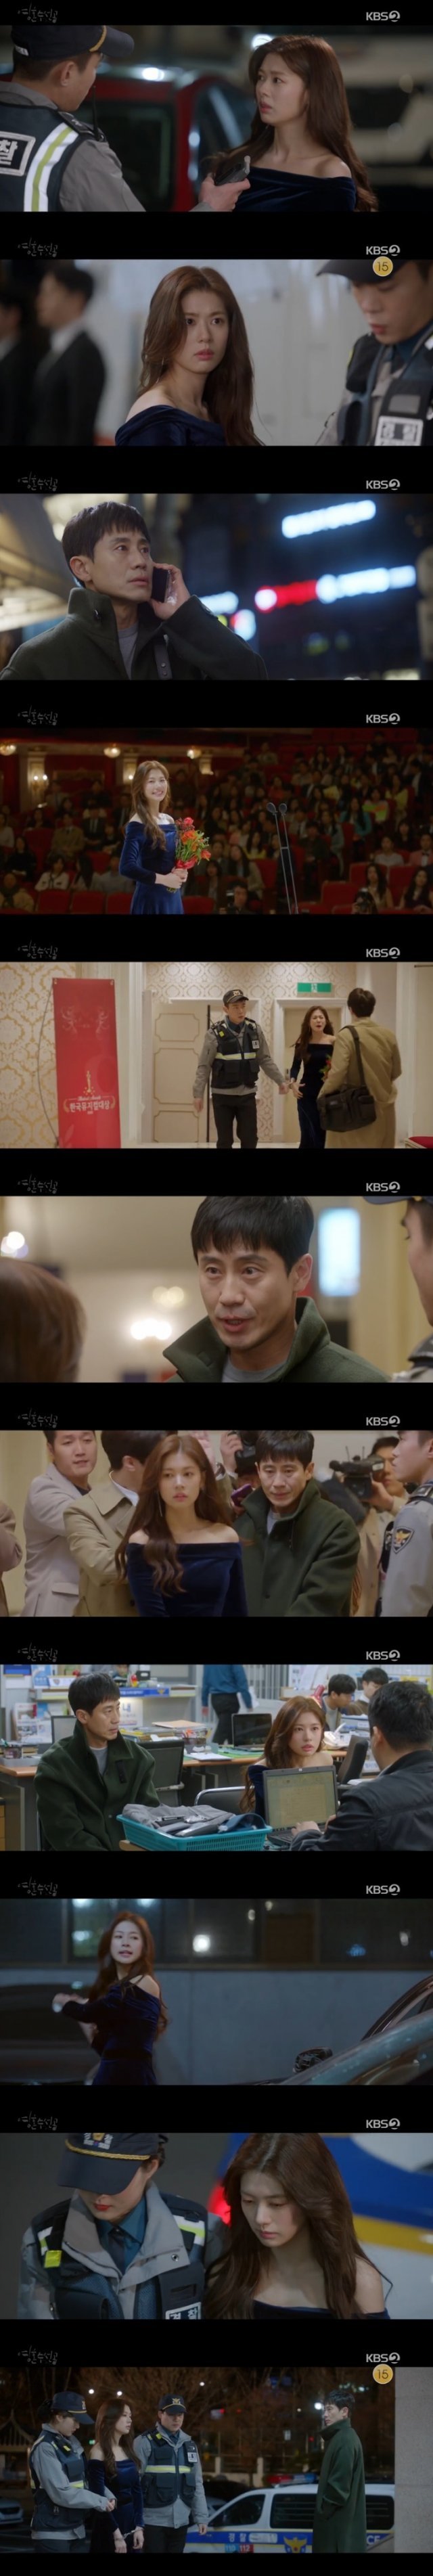 KBS 2TV ‘영혼수선공’ 캡처 © 뉴스1